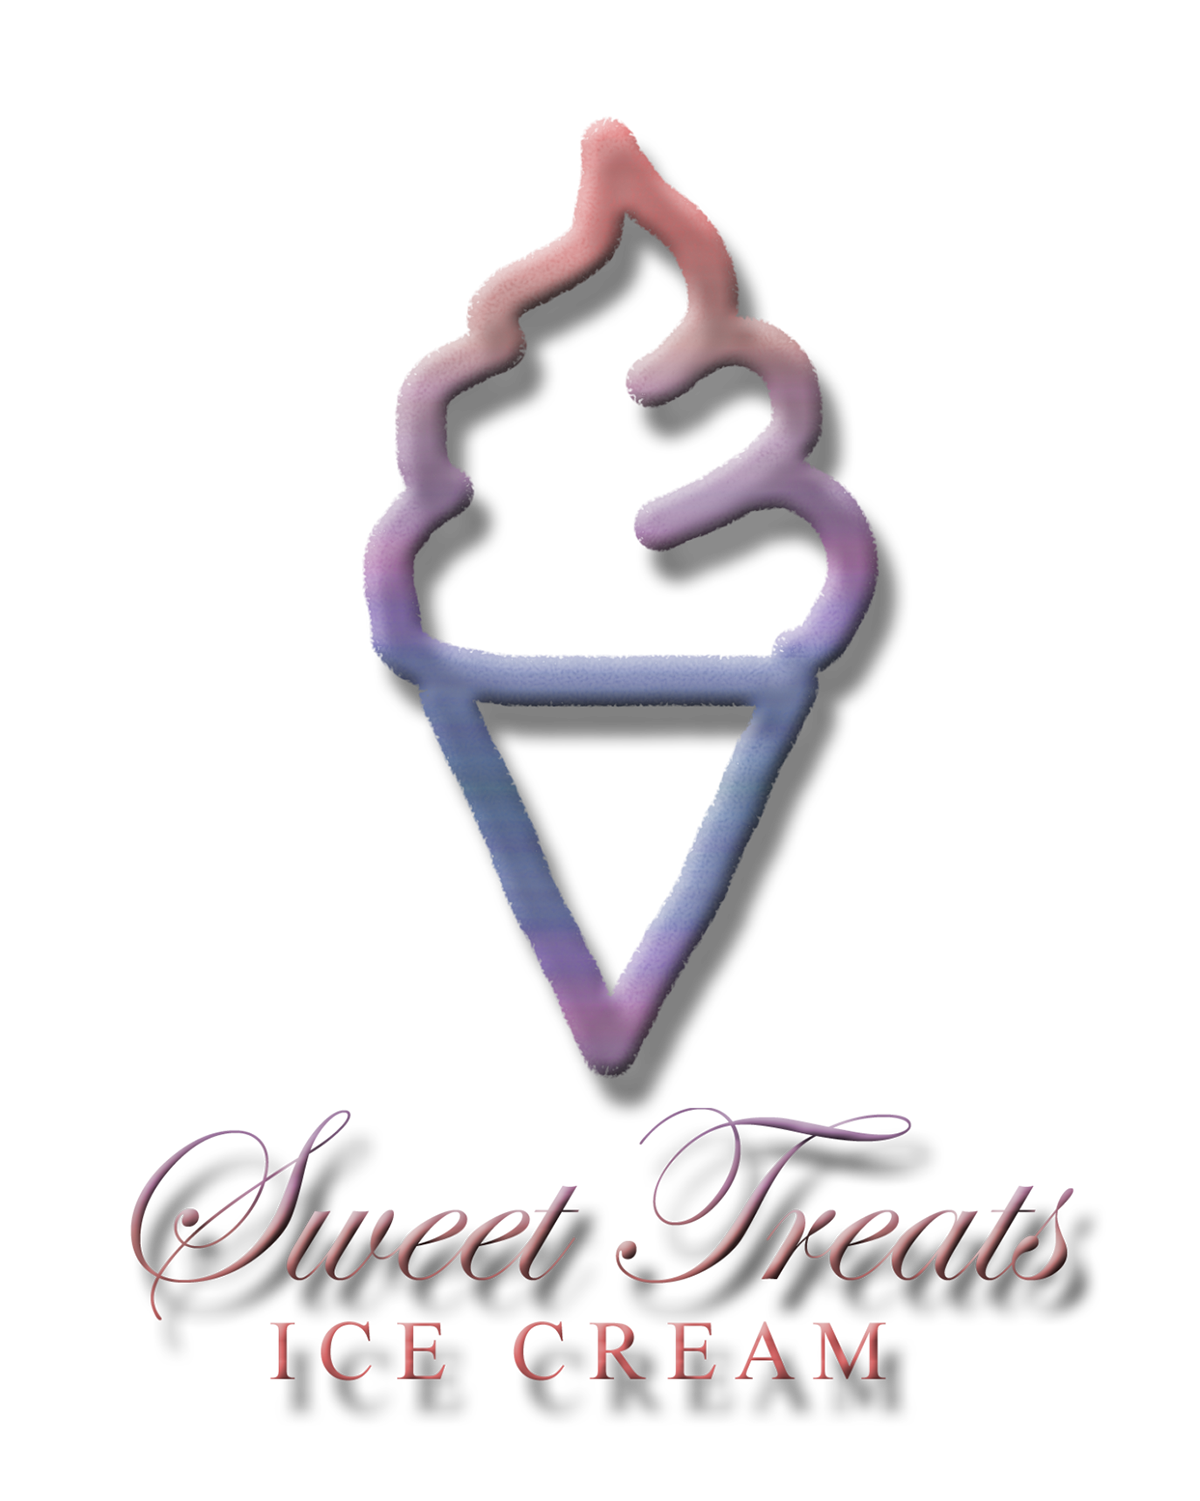 sweet treats ice cream imi2015